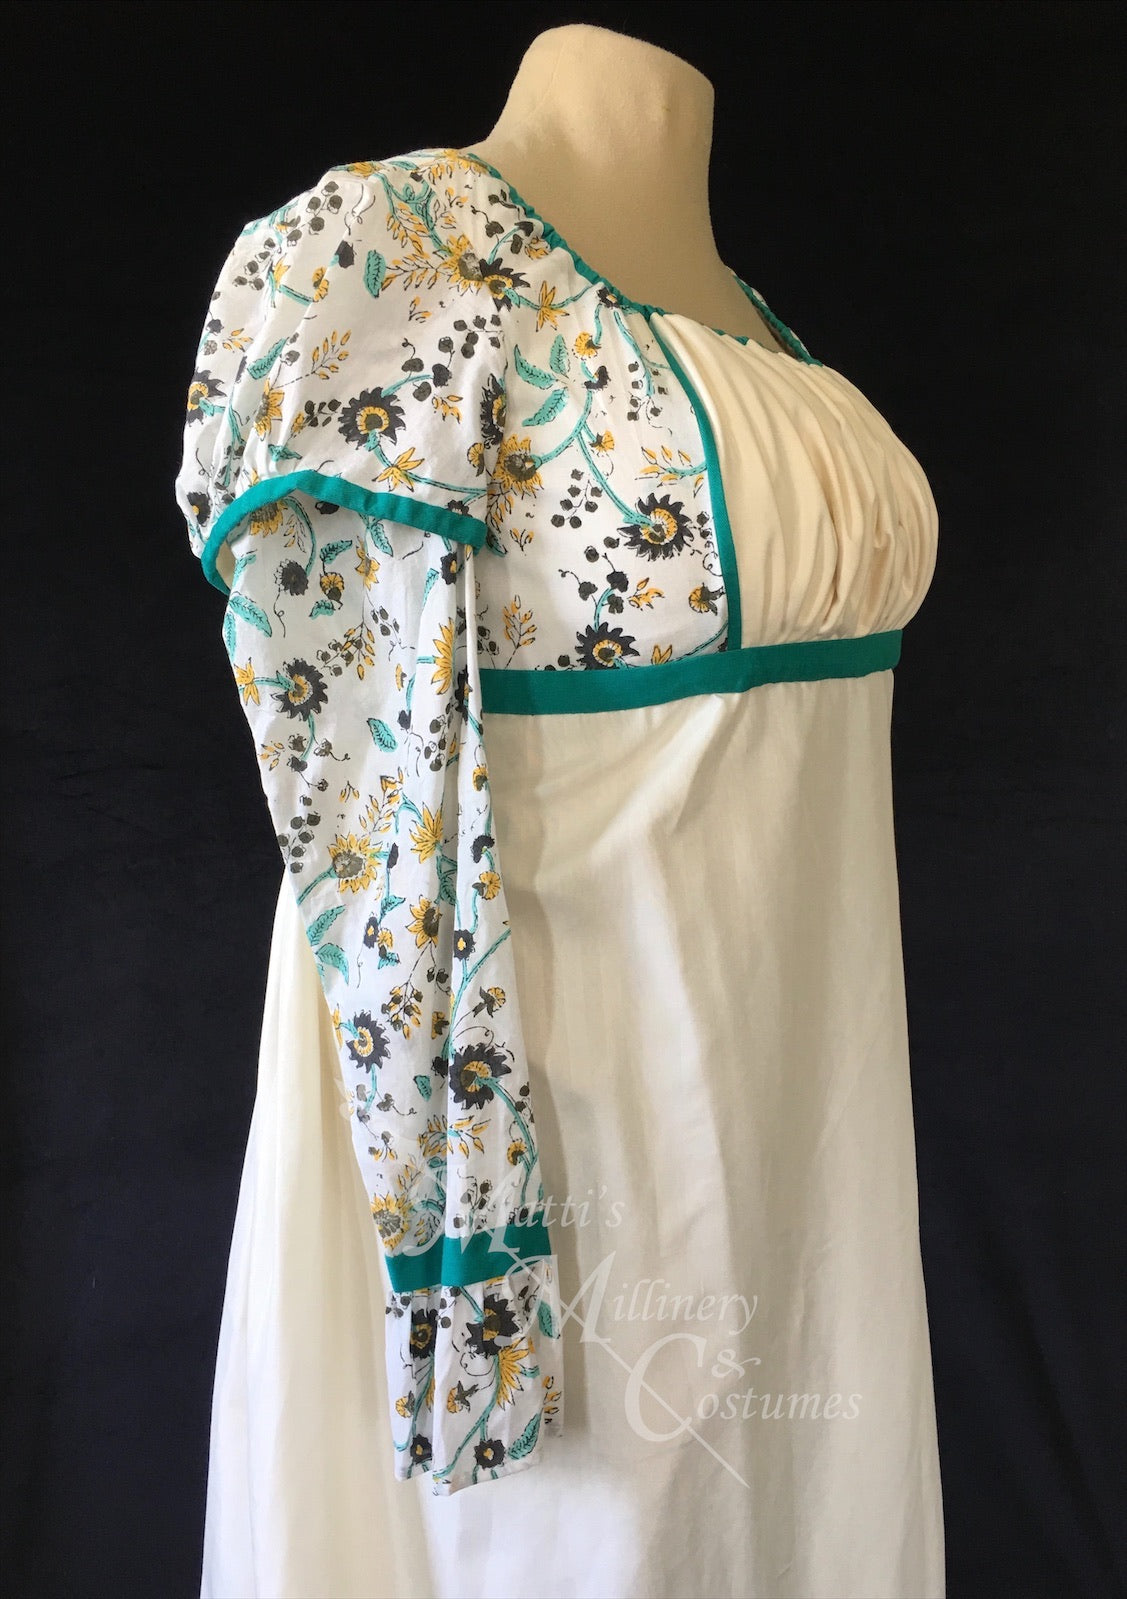 Teal Madeline Block Print Cotton Jane Austen Regency Day Dress Gown